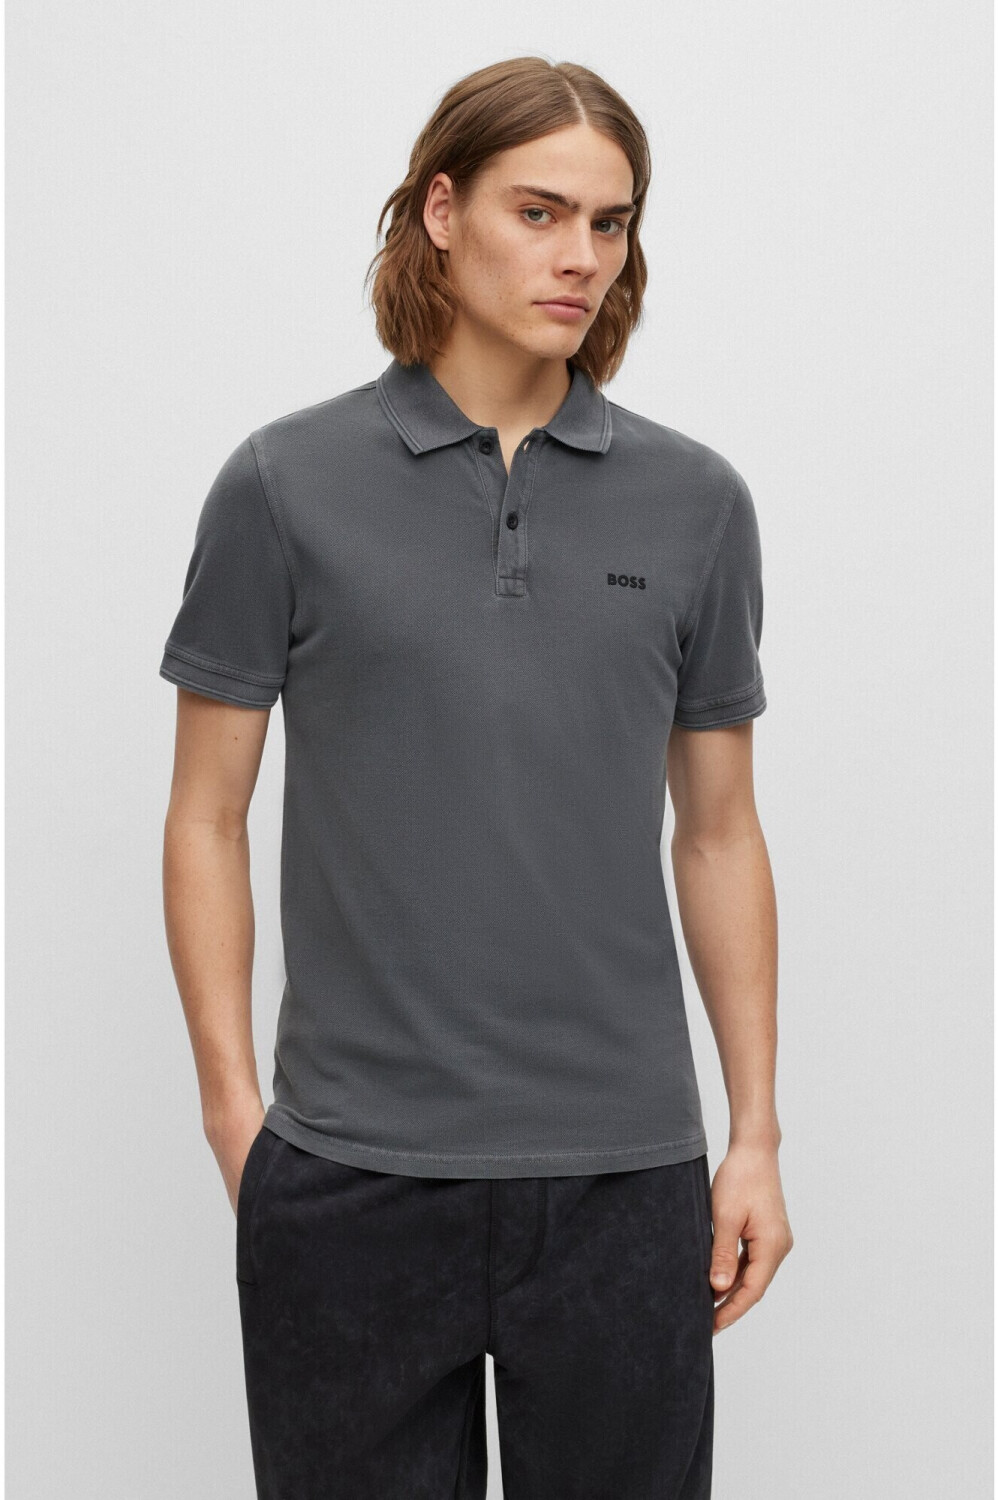 Hugo Boss Prime Slim-Fit Poloshirt (50468576-022) dark grey ab 47,00 € |  Preisvergleich bei